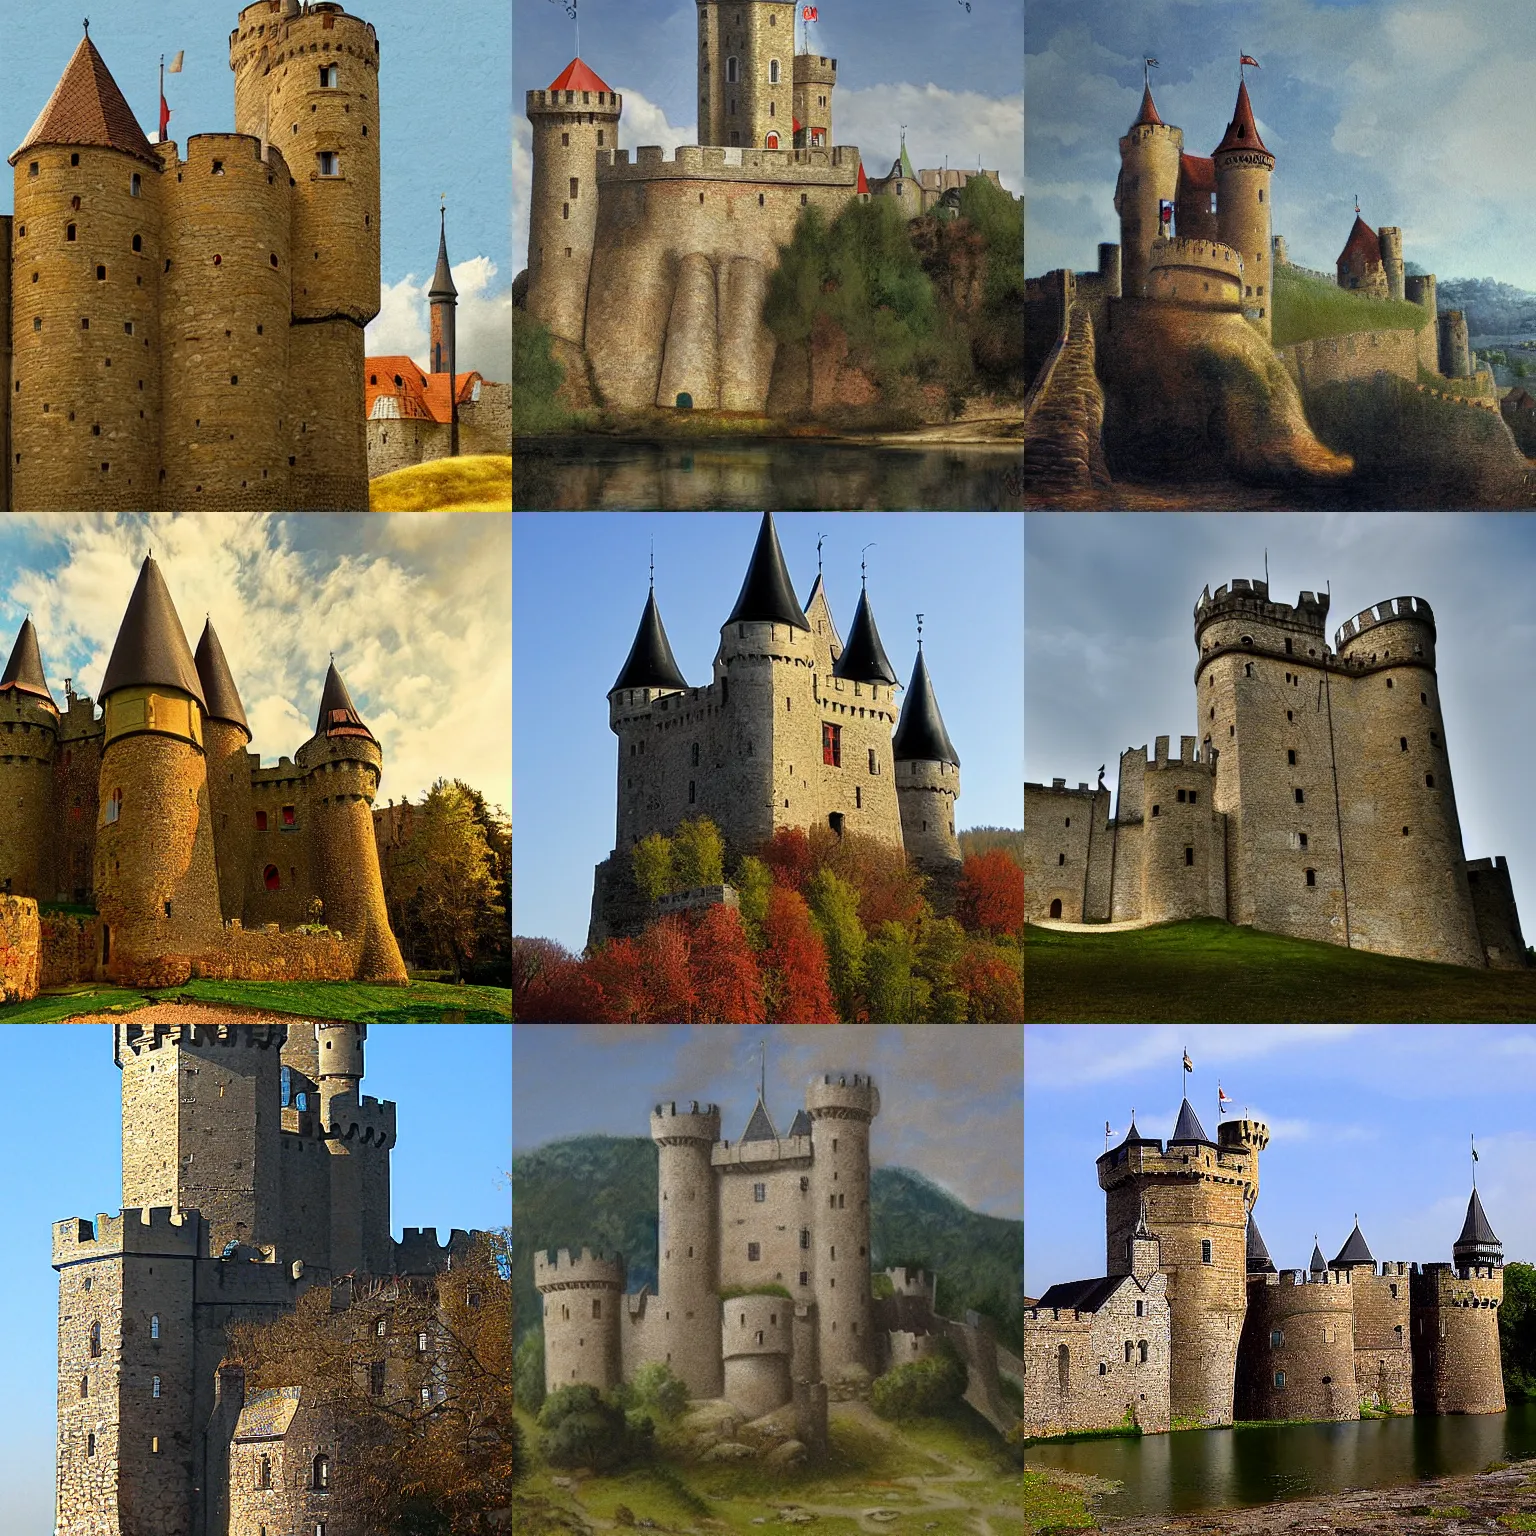 Prompt: medieval castle, by jan sluyters